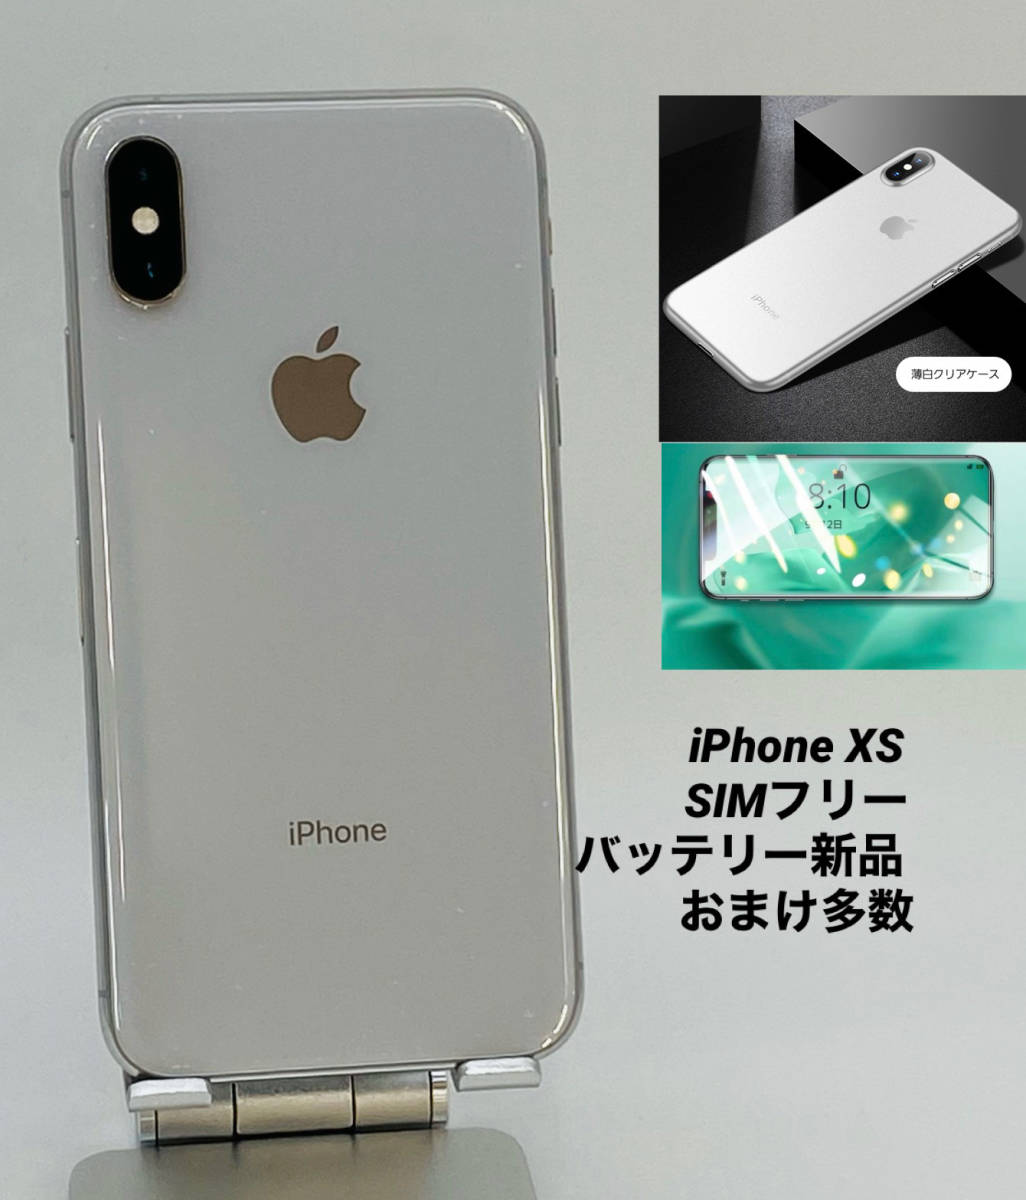 iPhoneXS 256GB シルバー/新品バッテリー/シムフリー/新品おまけ付 XS-058